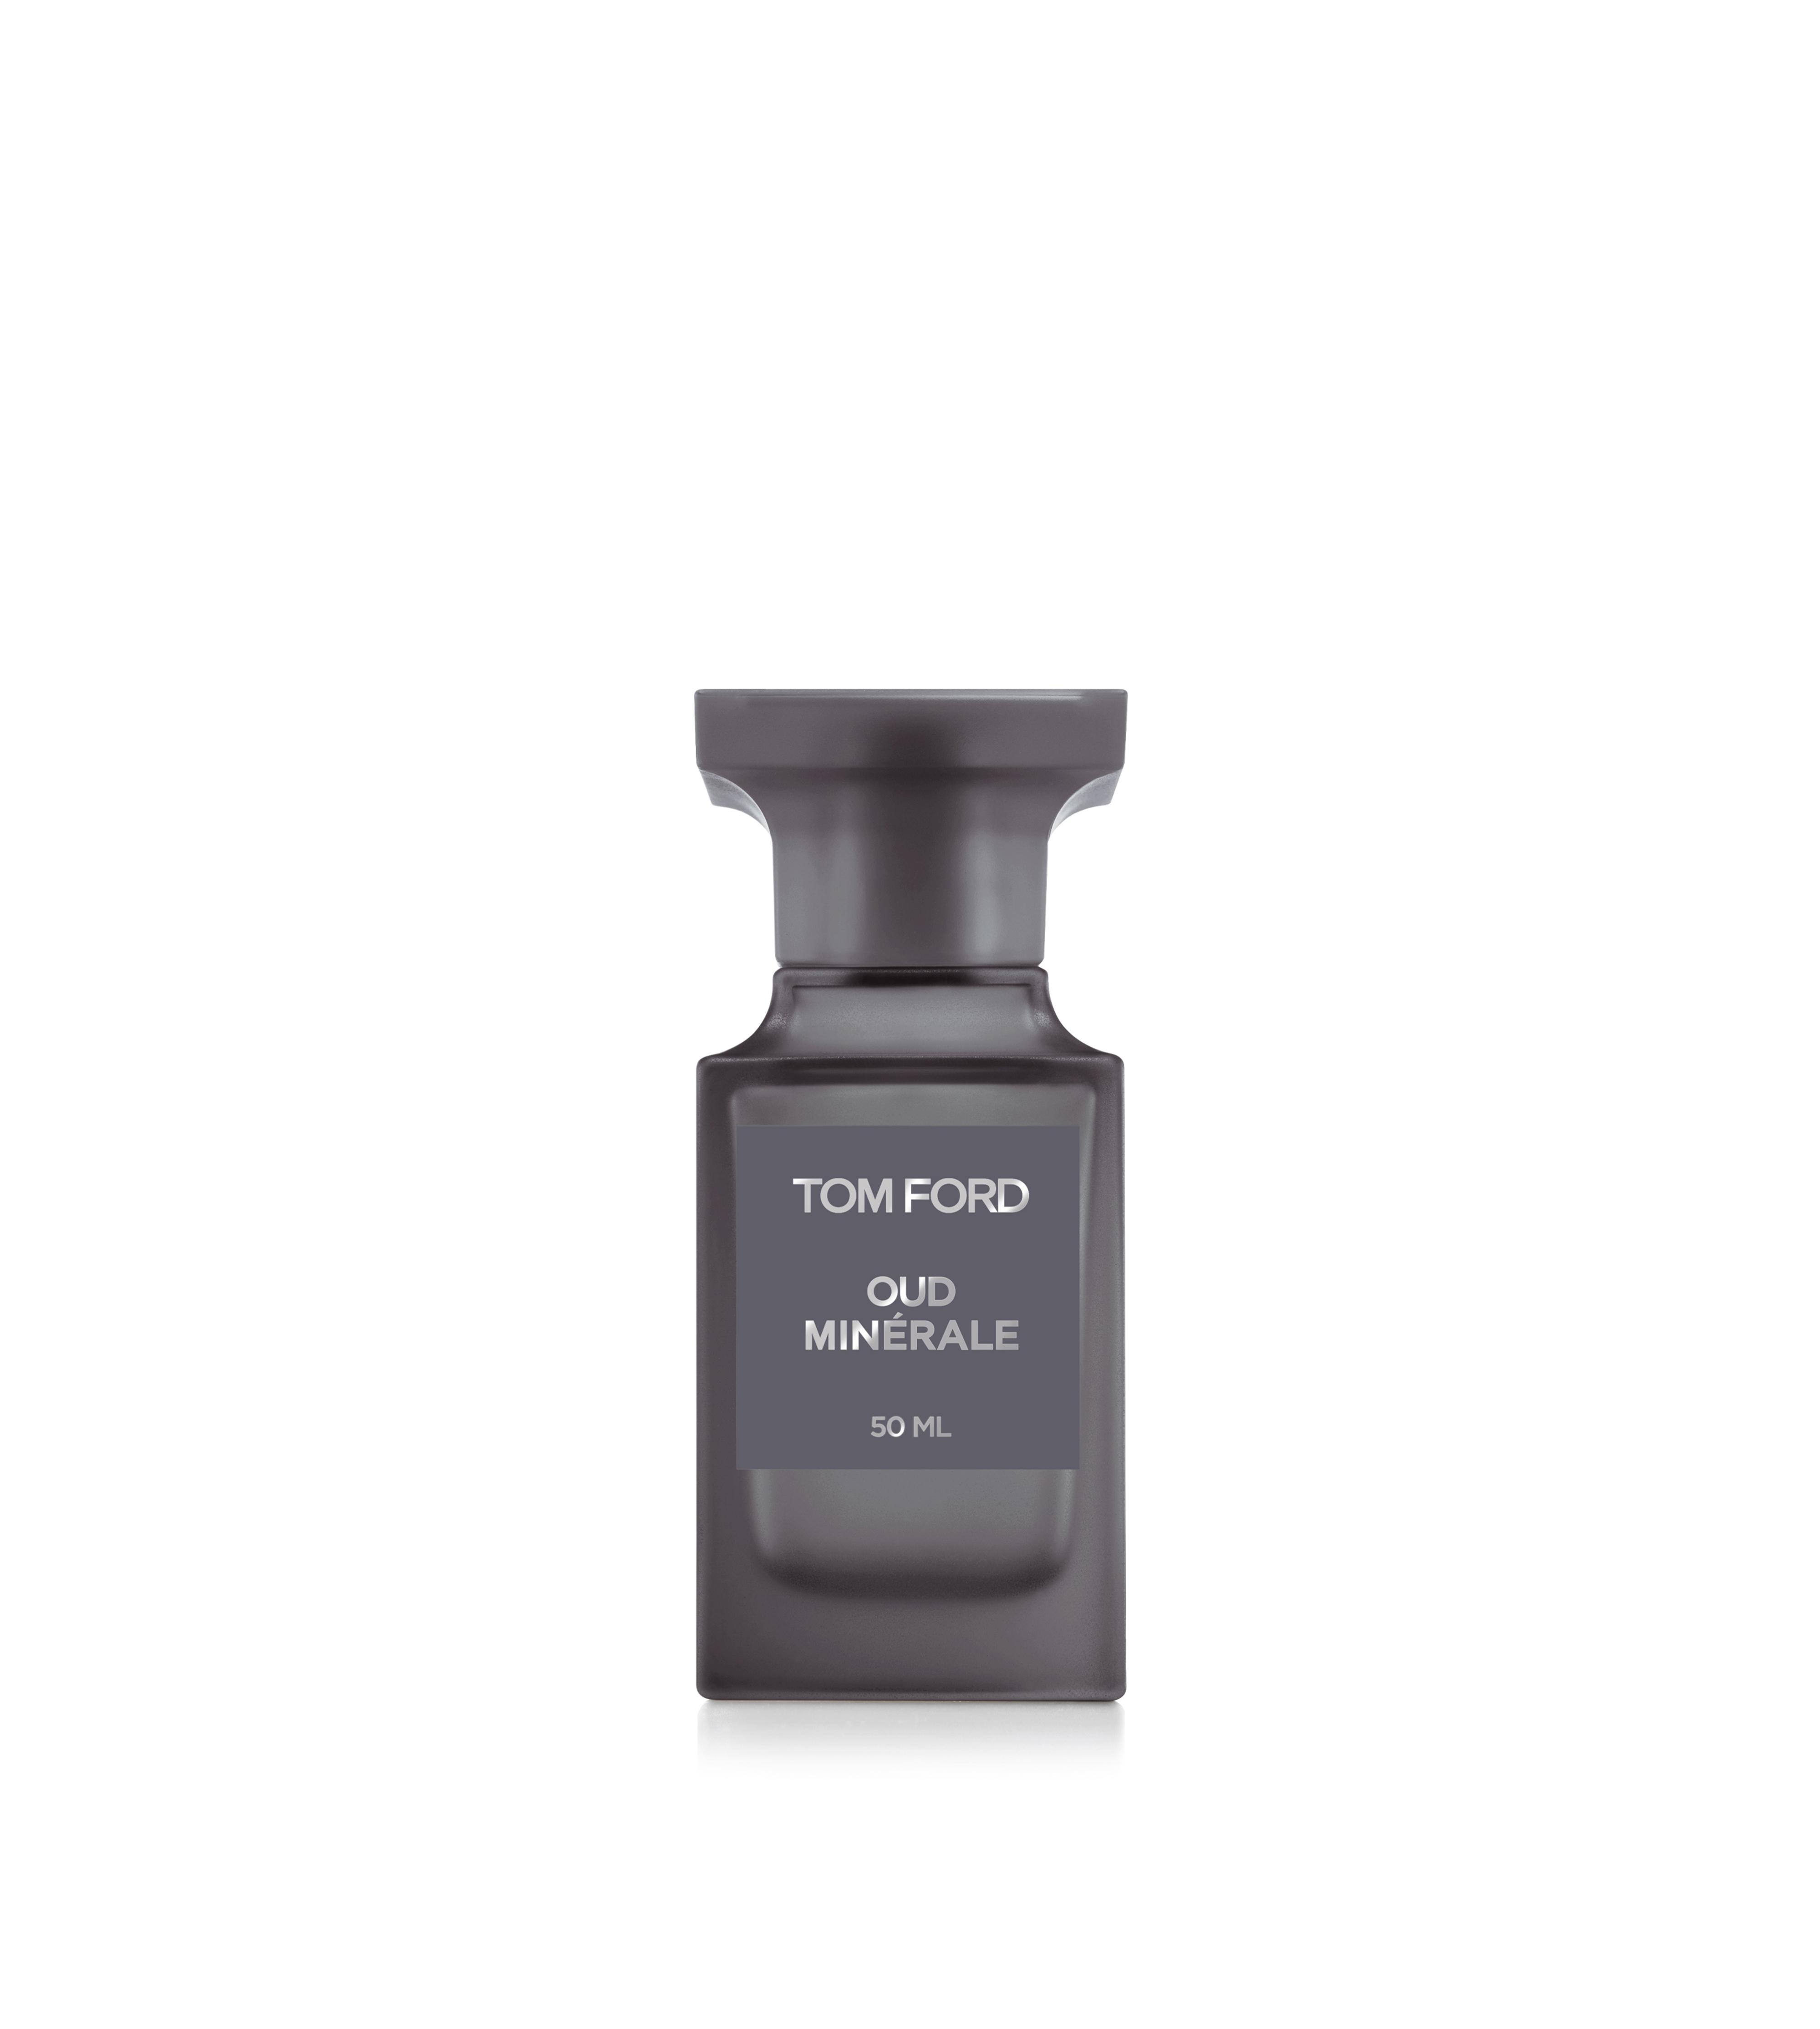 Signature - Fragrance | Beauty | TomFord.co.uk